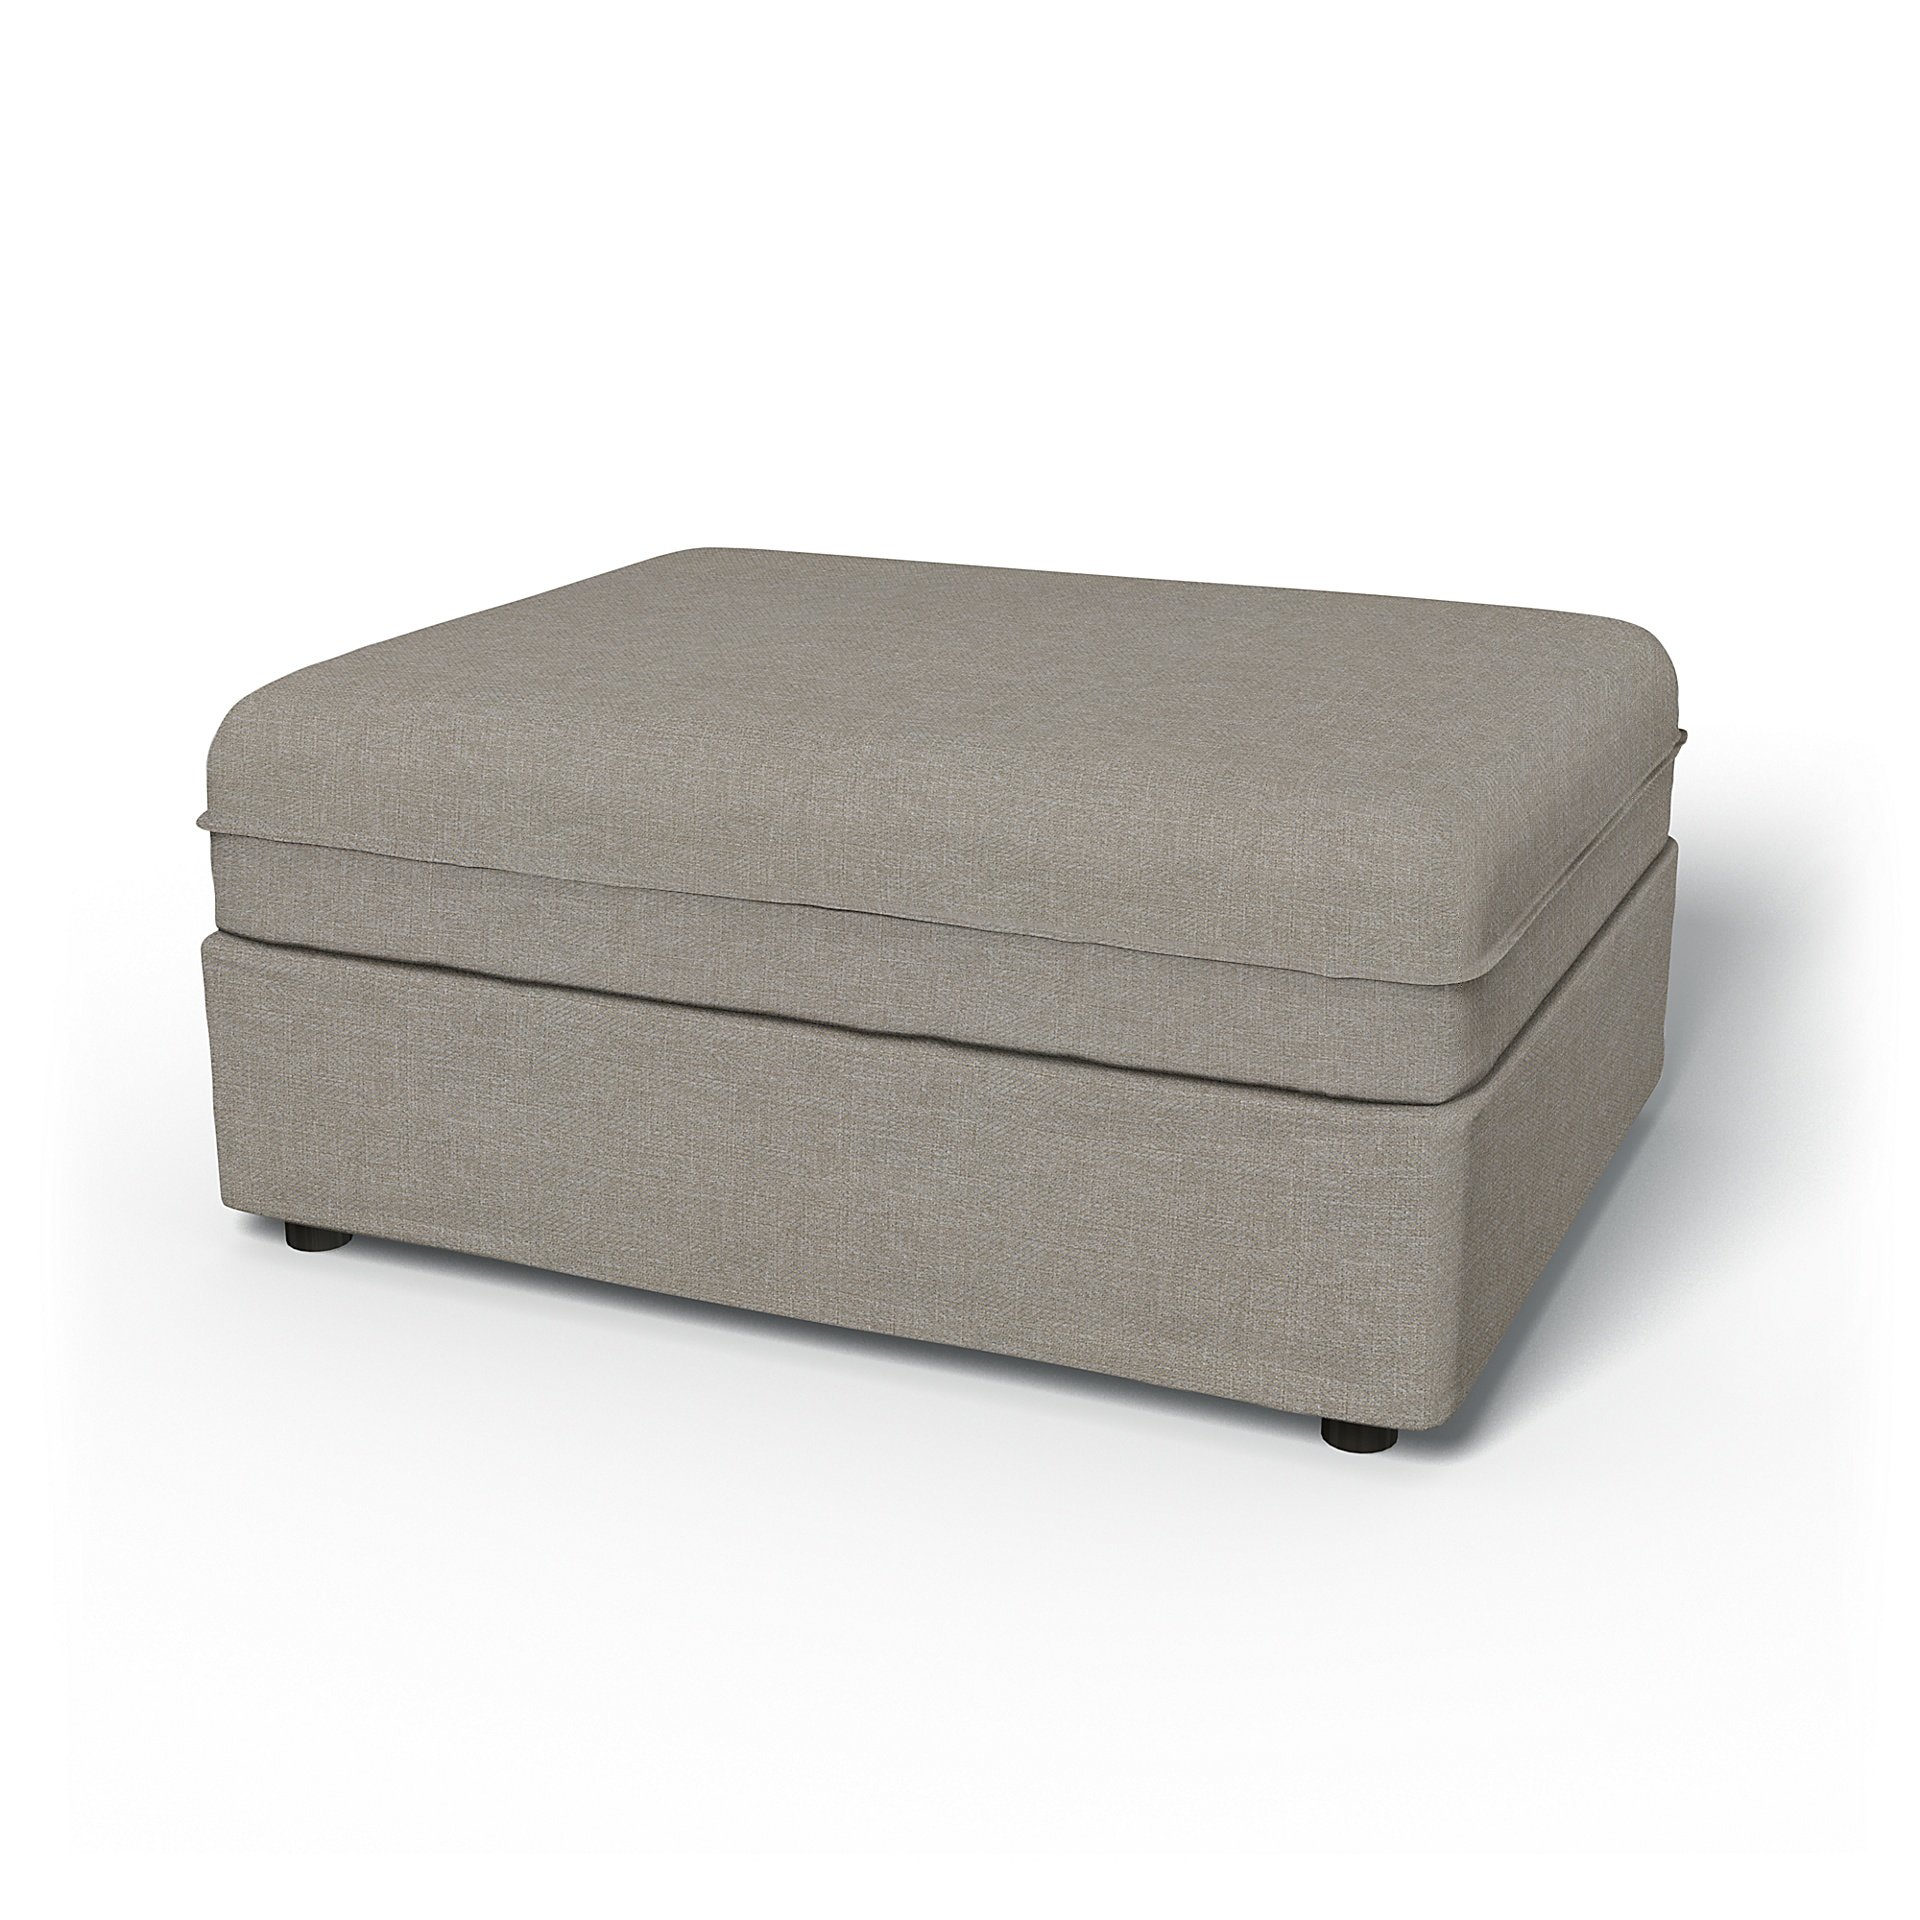 IKEA - Vallentuna Seat Module Cover 100x80cm 39x32in, Greige, Boucle & Texture - Bemz